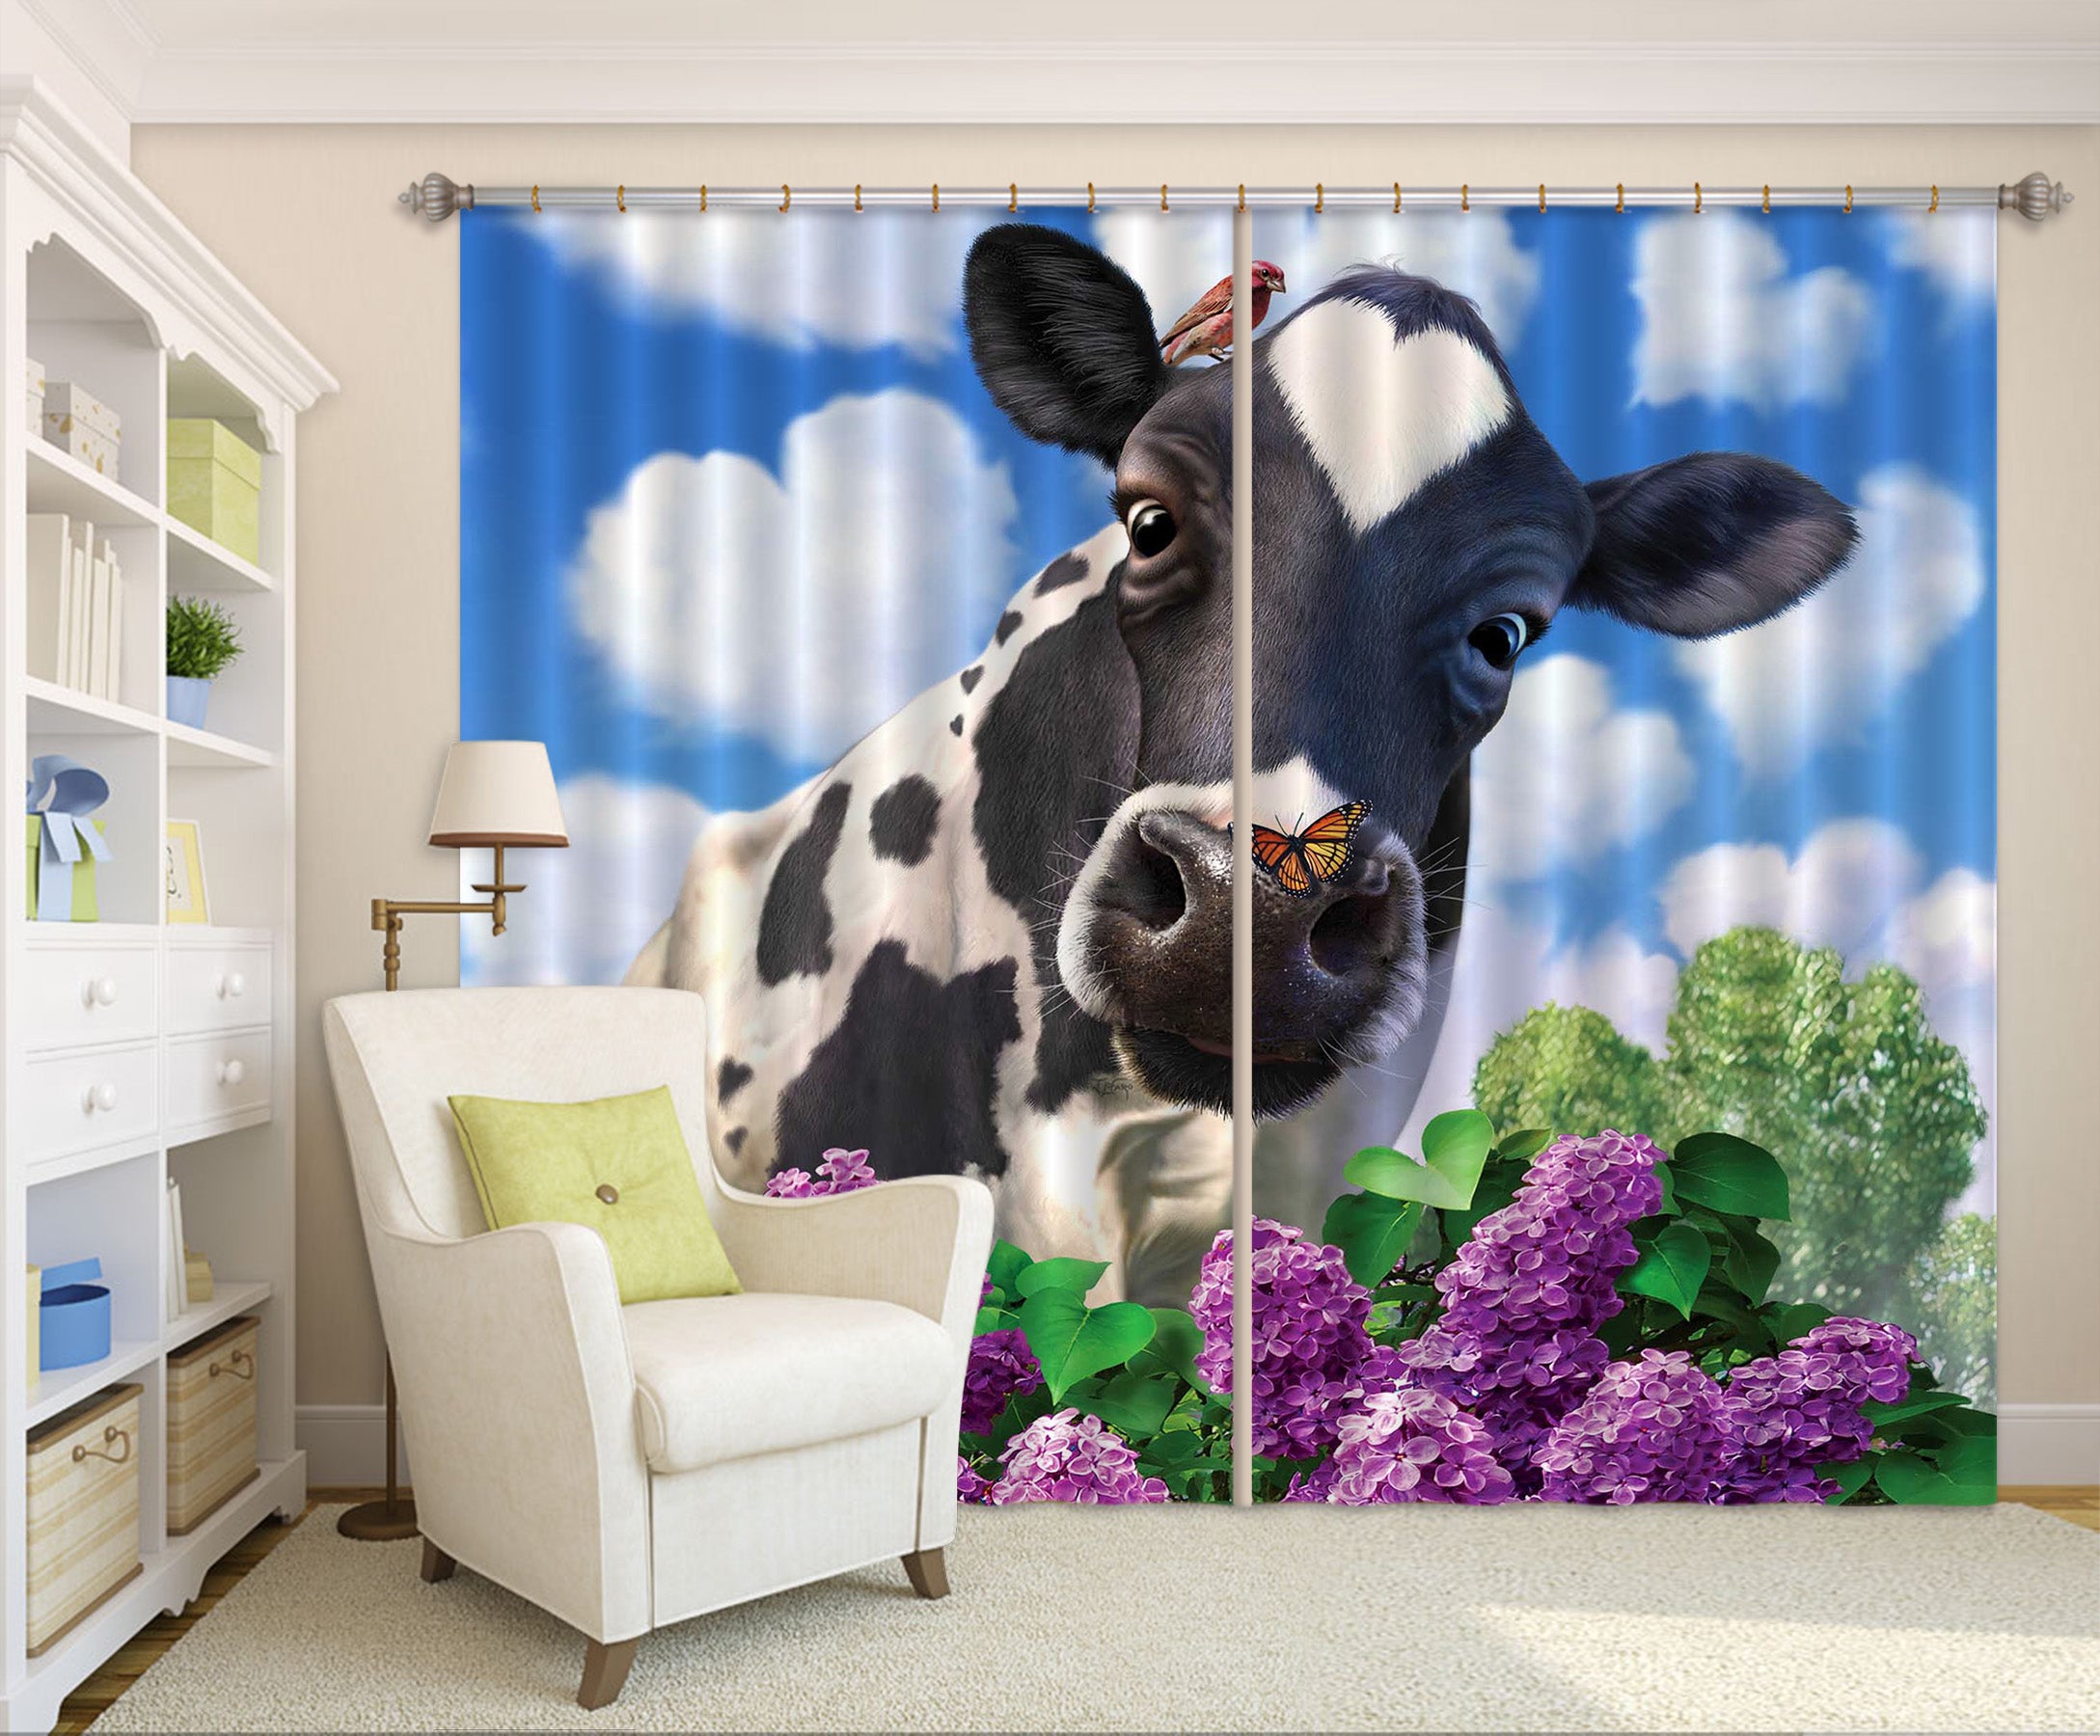 3D Cows 86074 Jerry LoFaro Curtain Curtains Drapes